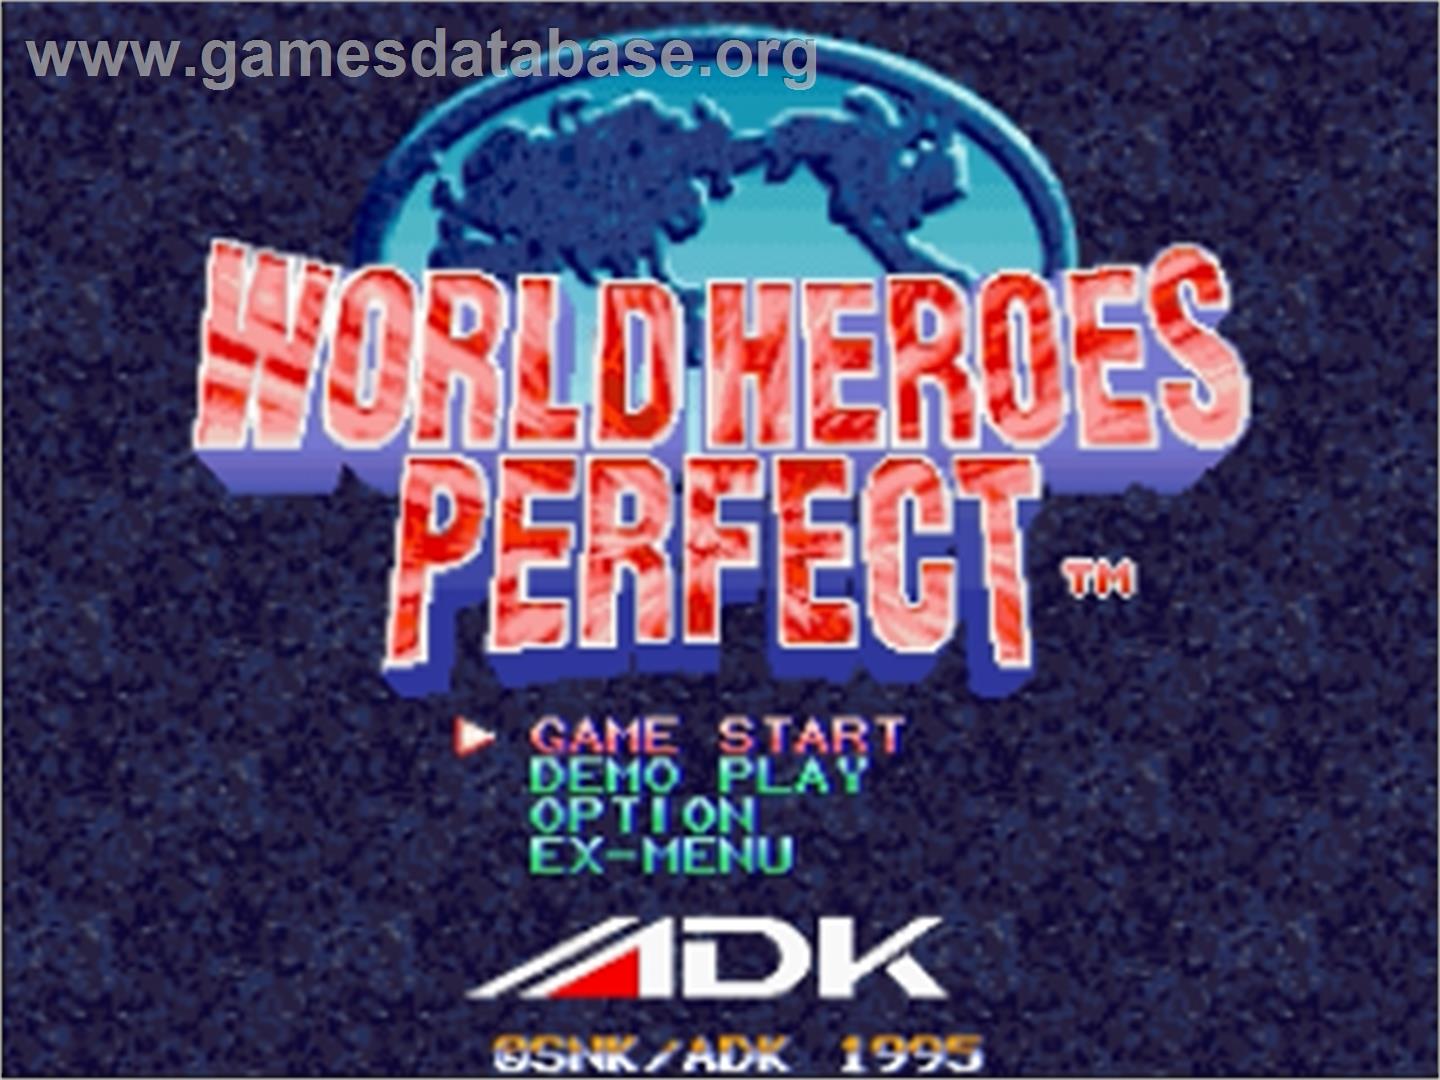 World Heroes Perfect - Sega Saturn - Artwork - Title Screen